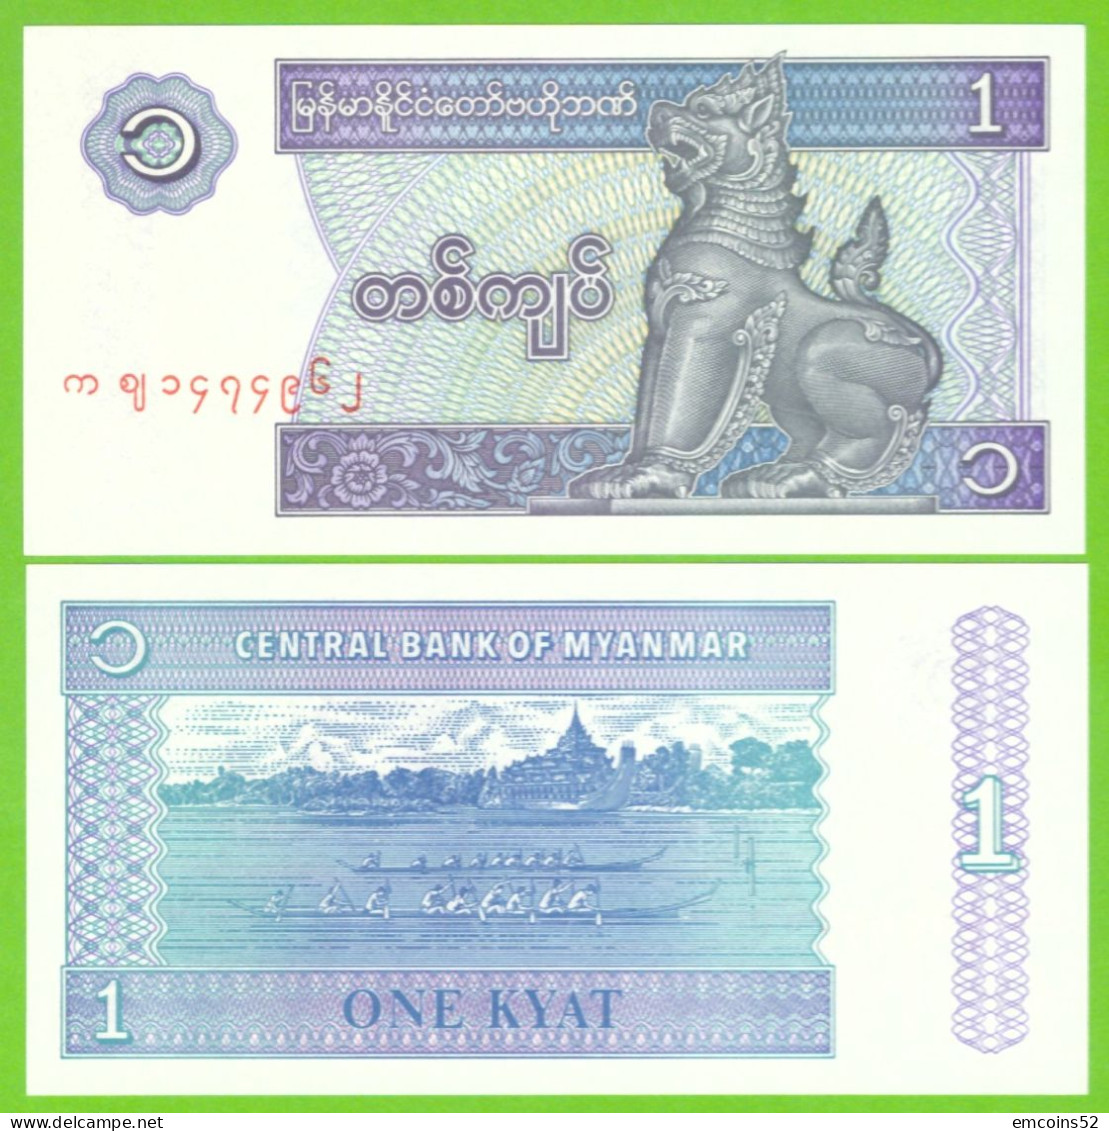 MYANMAR 1 KYAT ND 1996 P-69(1) UNC - Myanmar